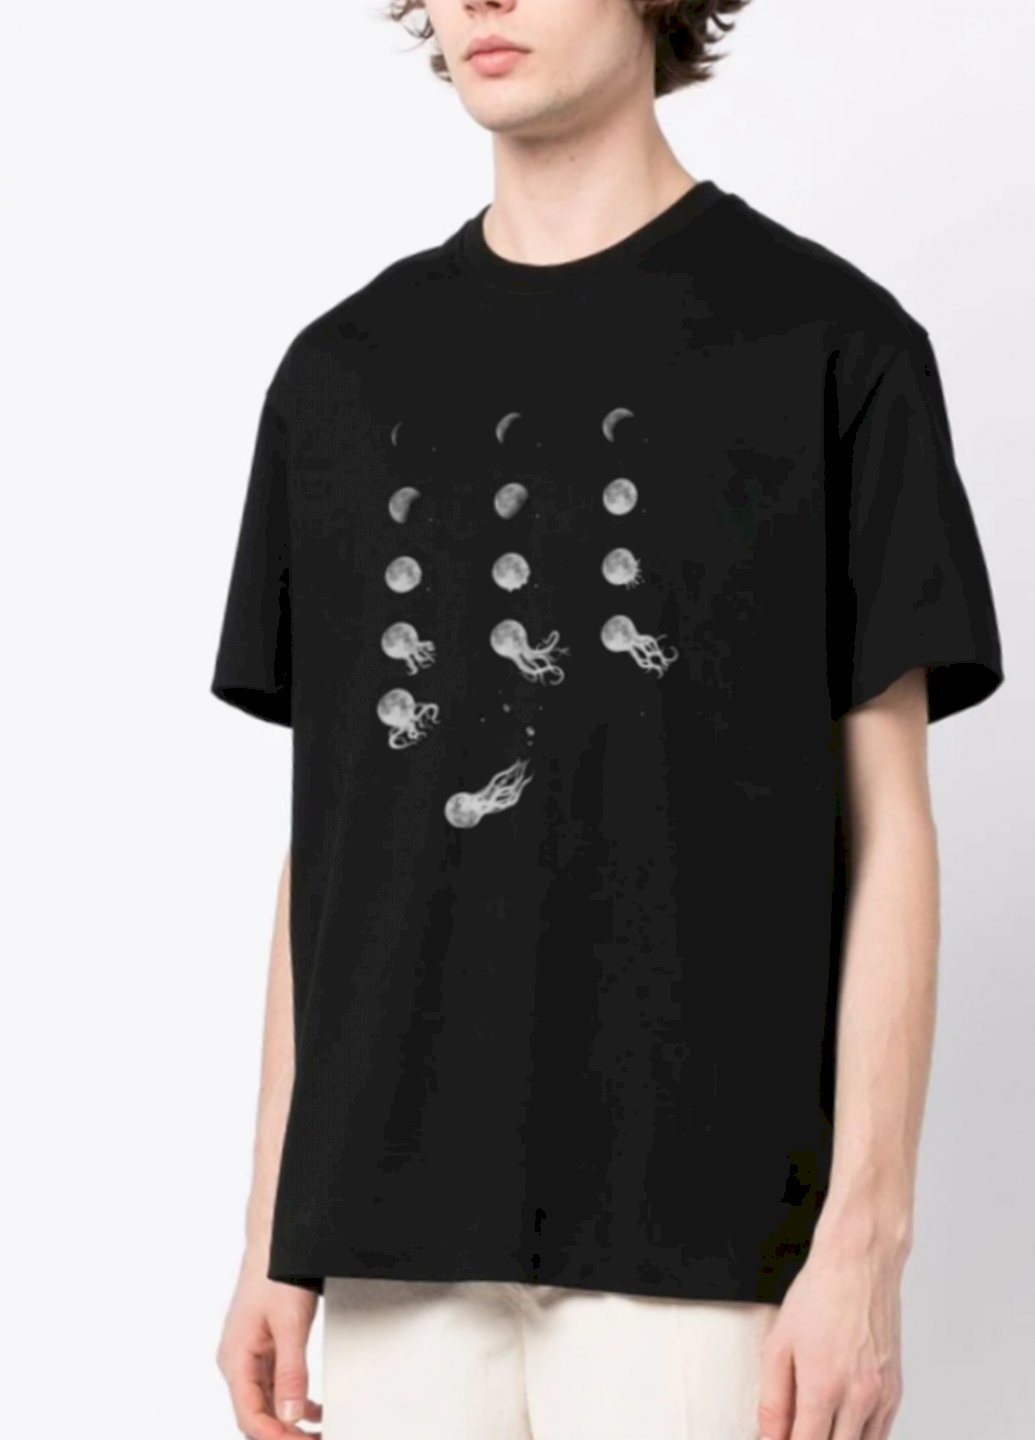 Черная футболка oversize мужская черная Trace of Space